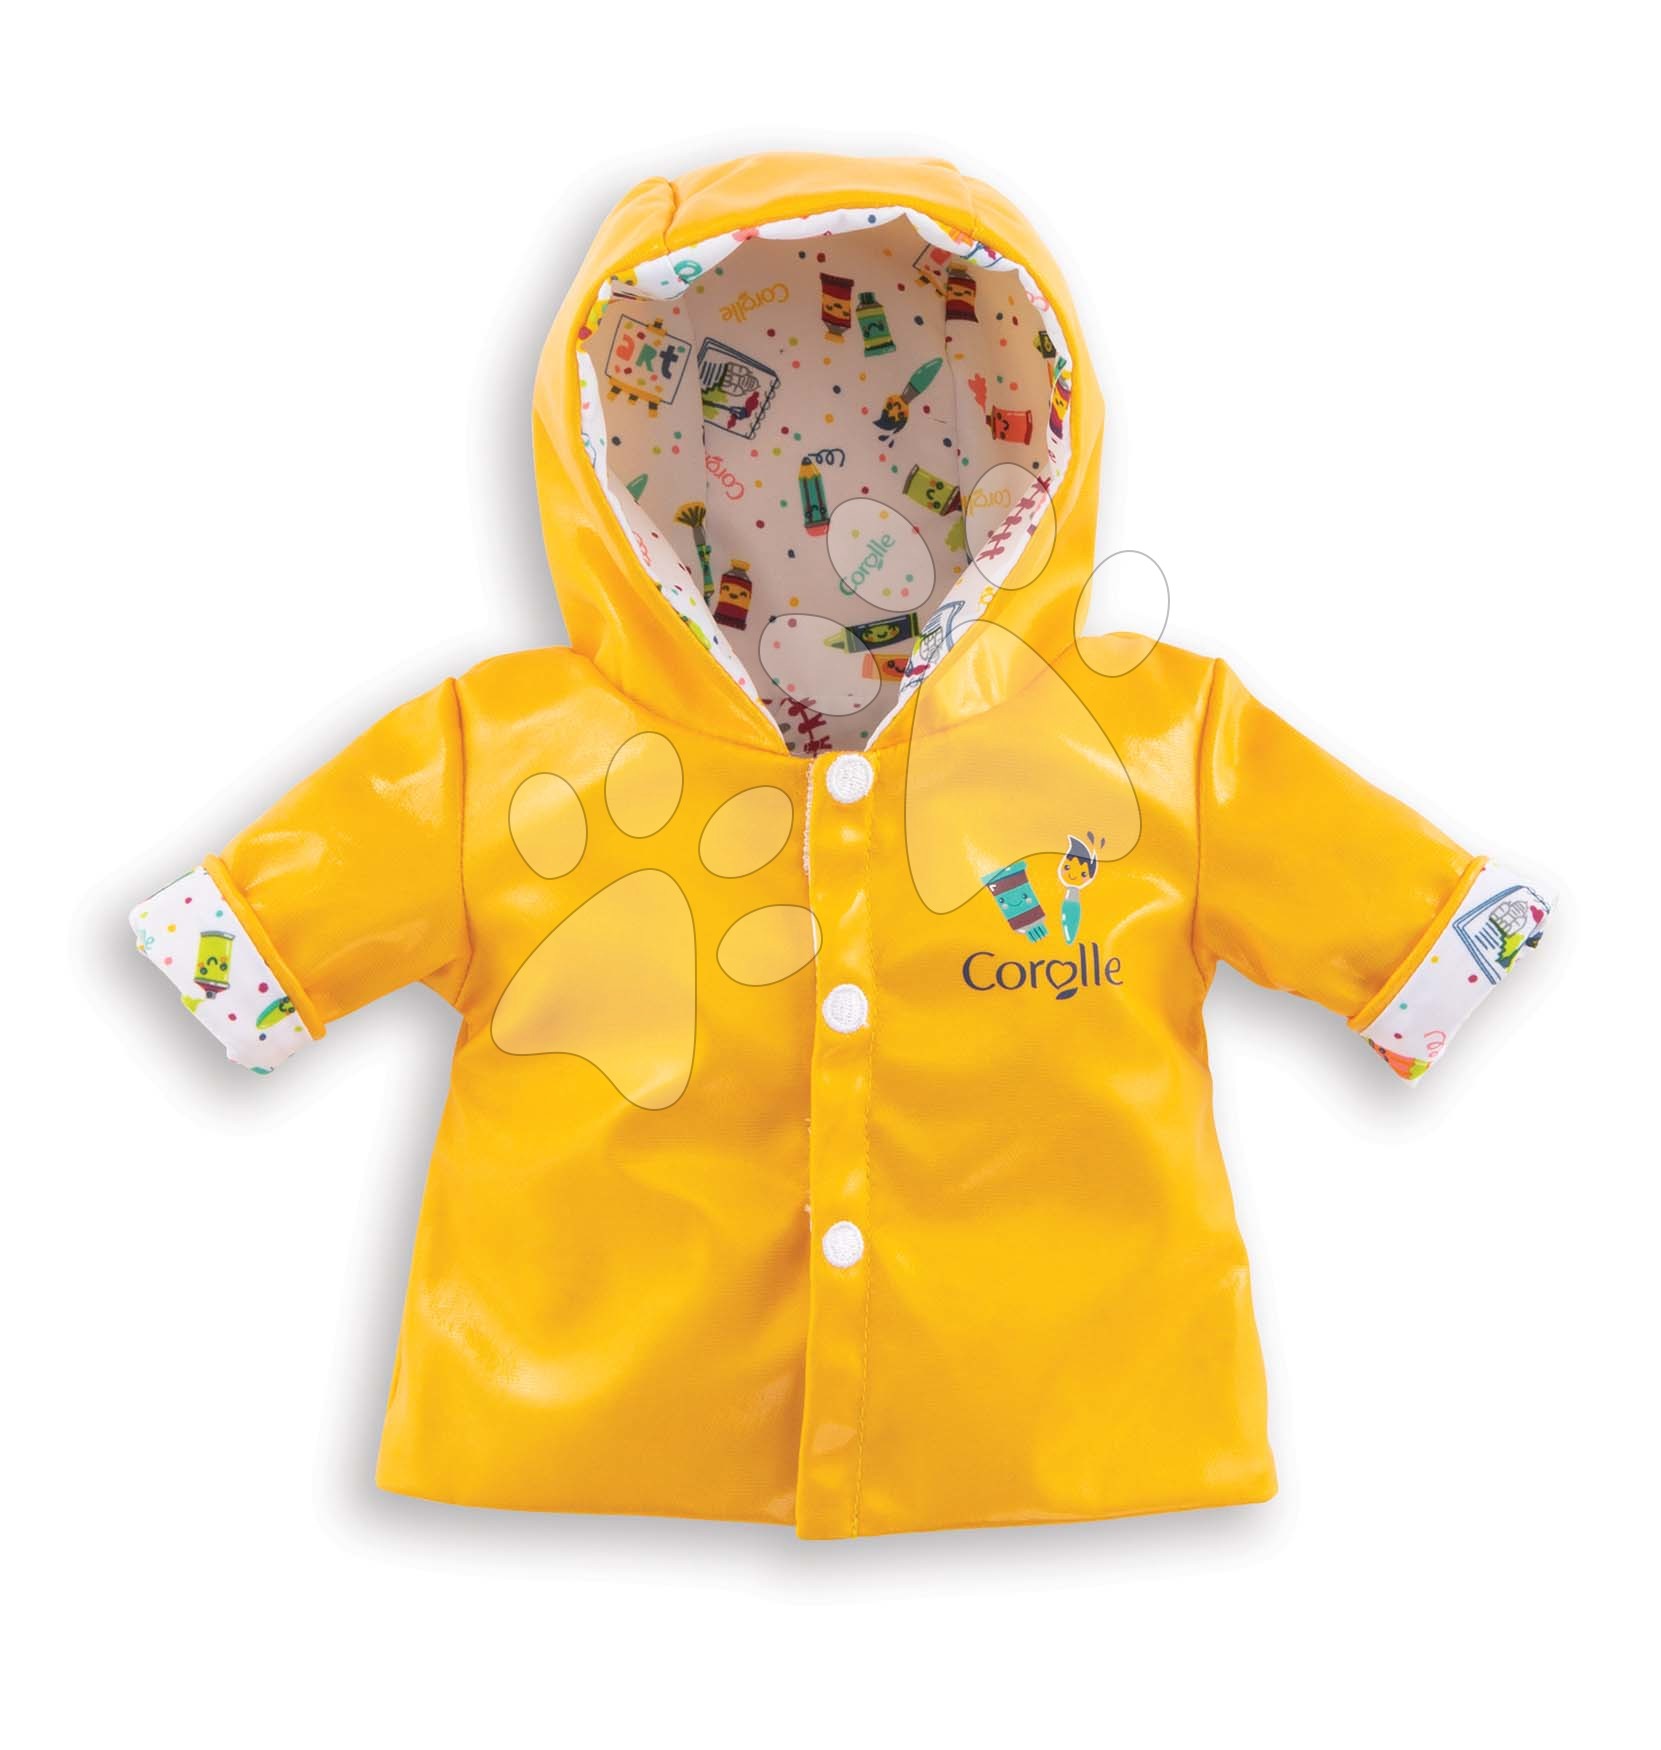 Oblečenie Rain Coat Little Artist Mon Grand Poupon Corolle pre 36 cm bábiku od 24 mes